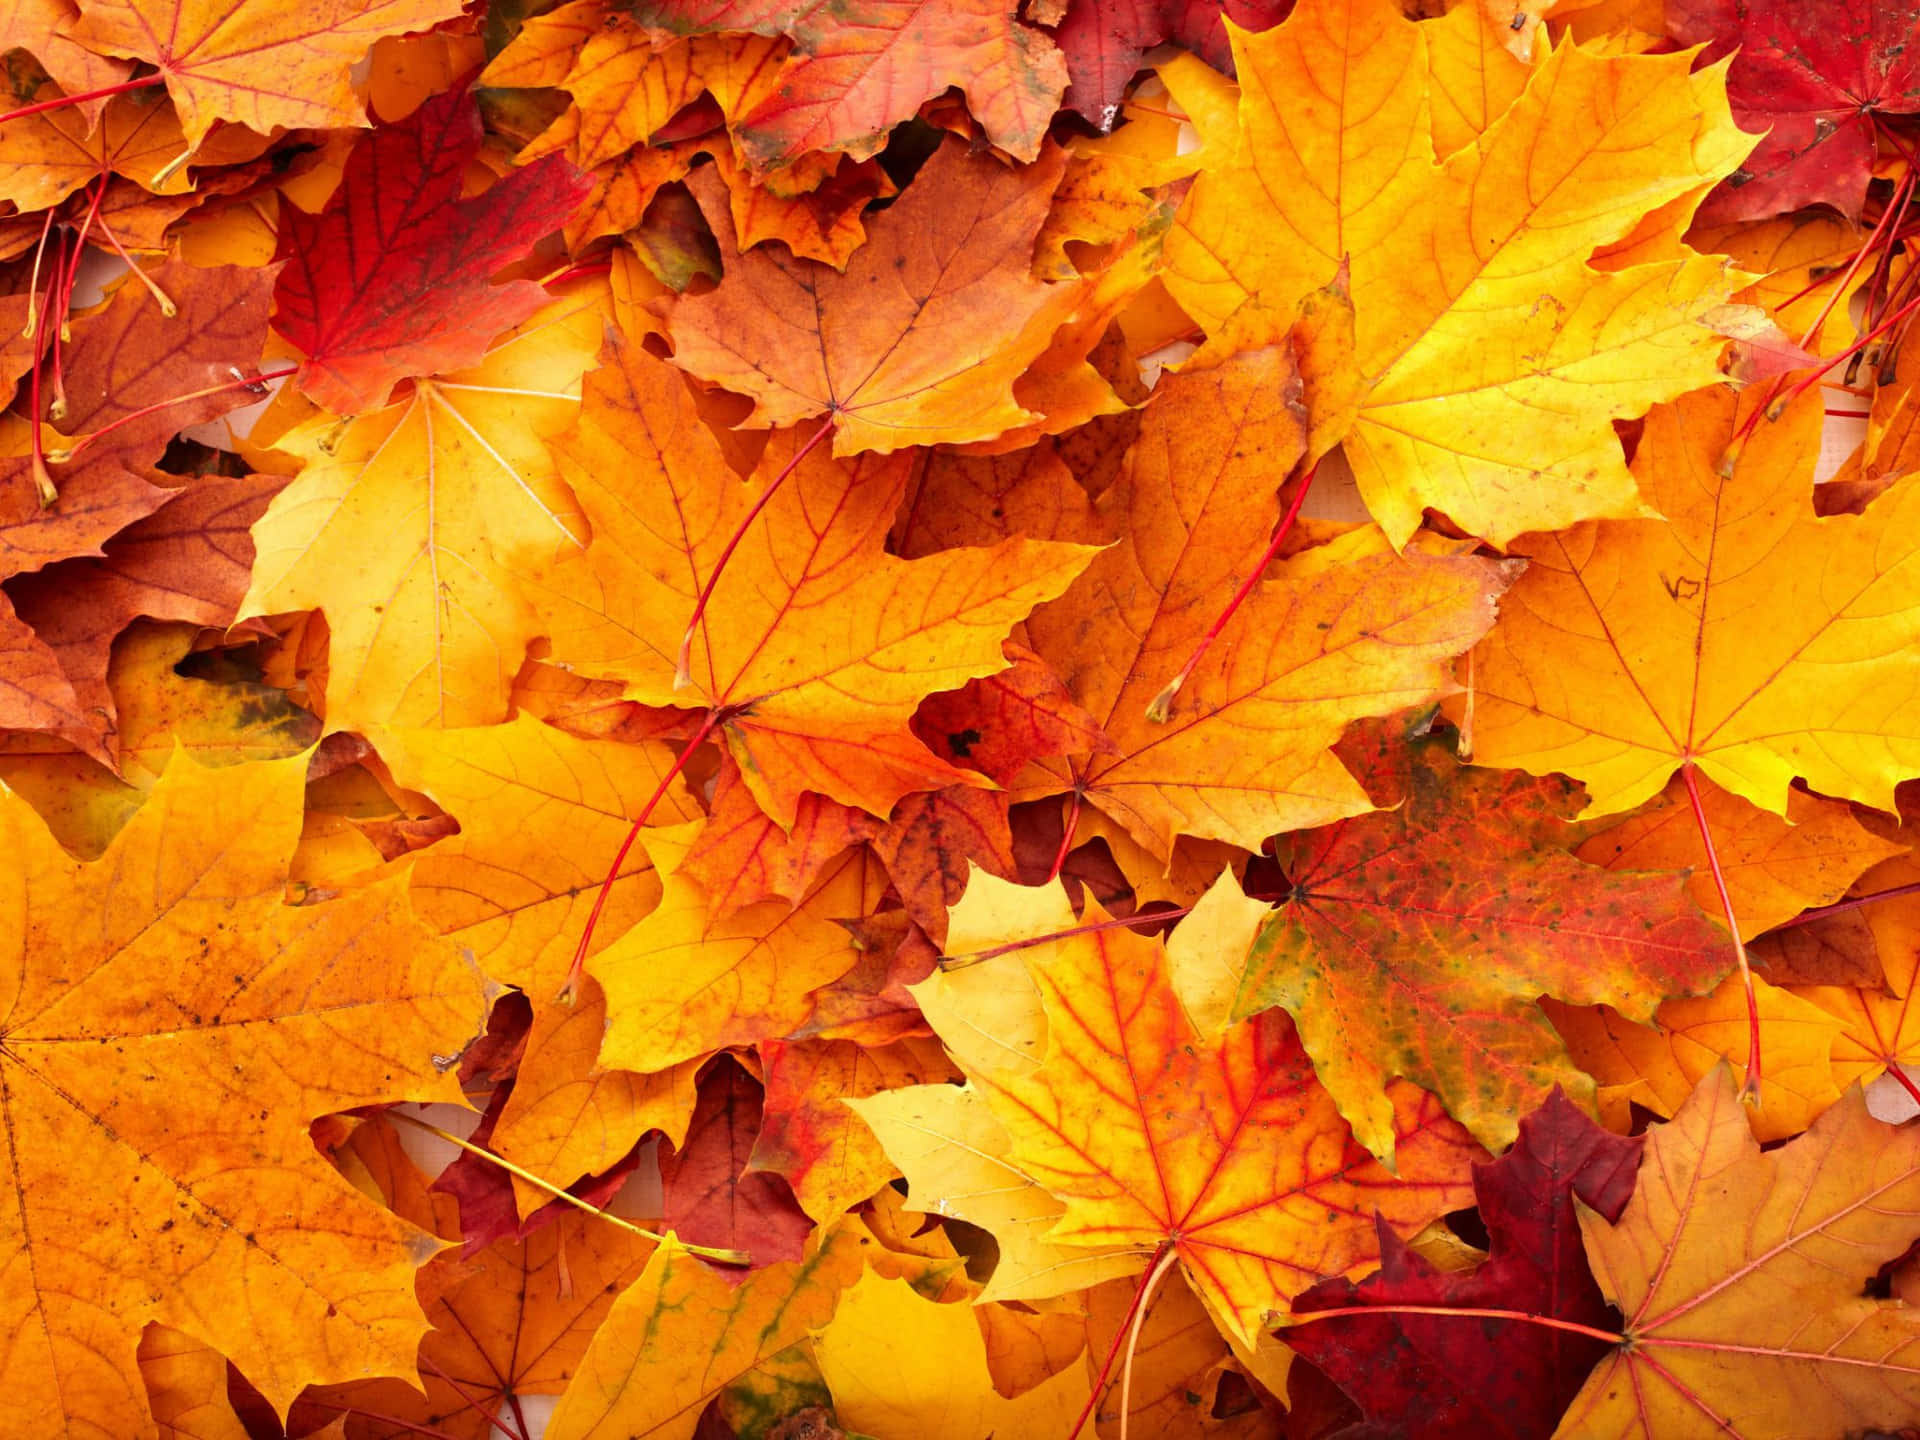 "Beautiful Fall Leaves Creating a Stunning Autumn Scene"